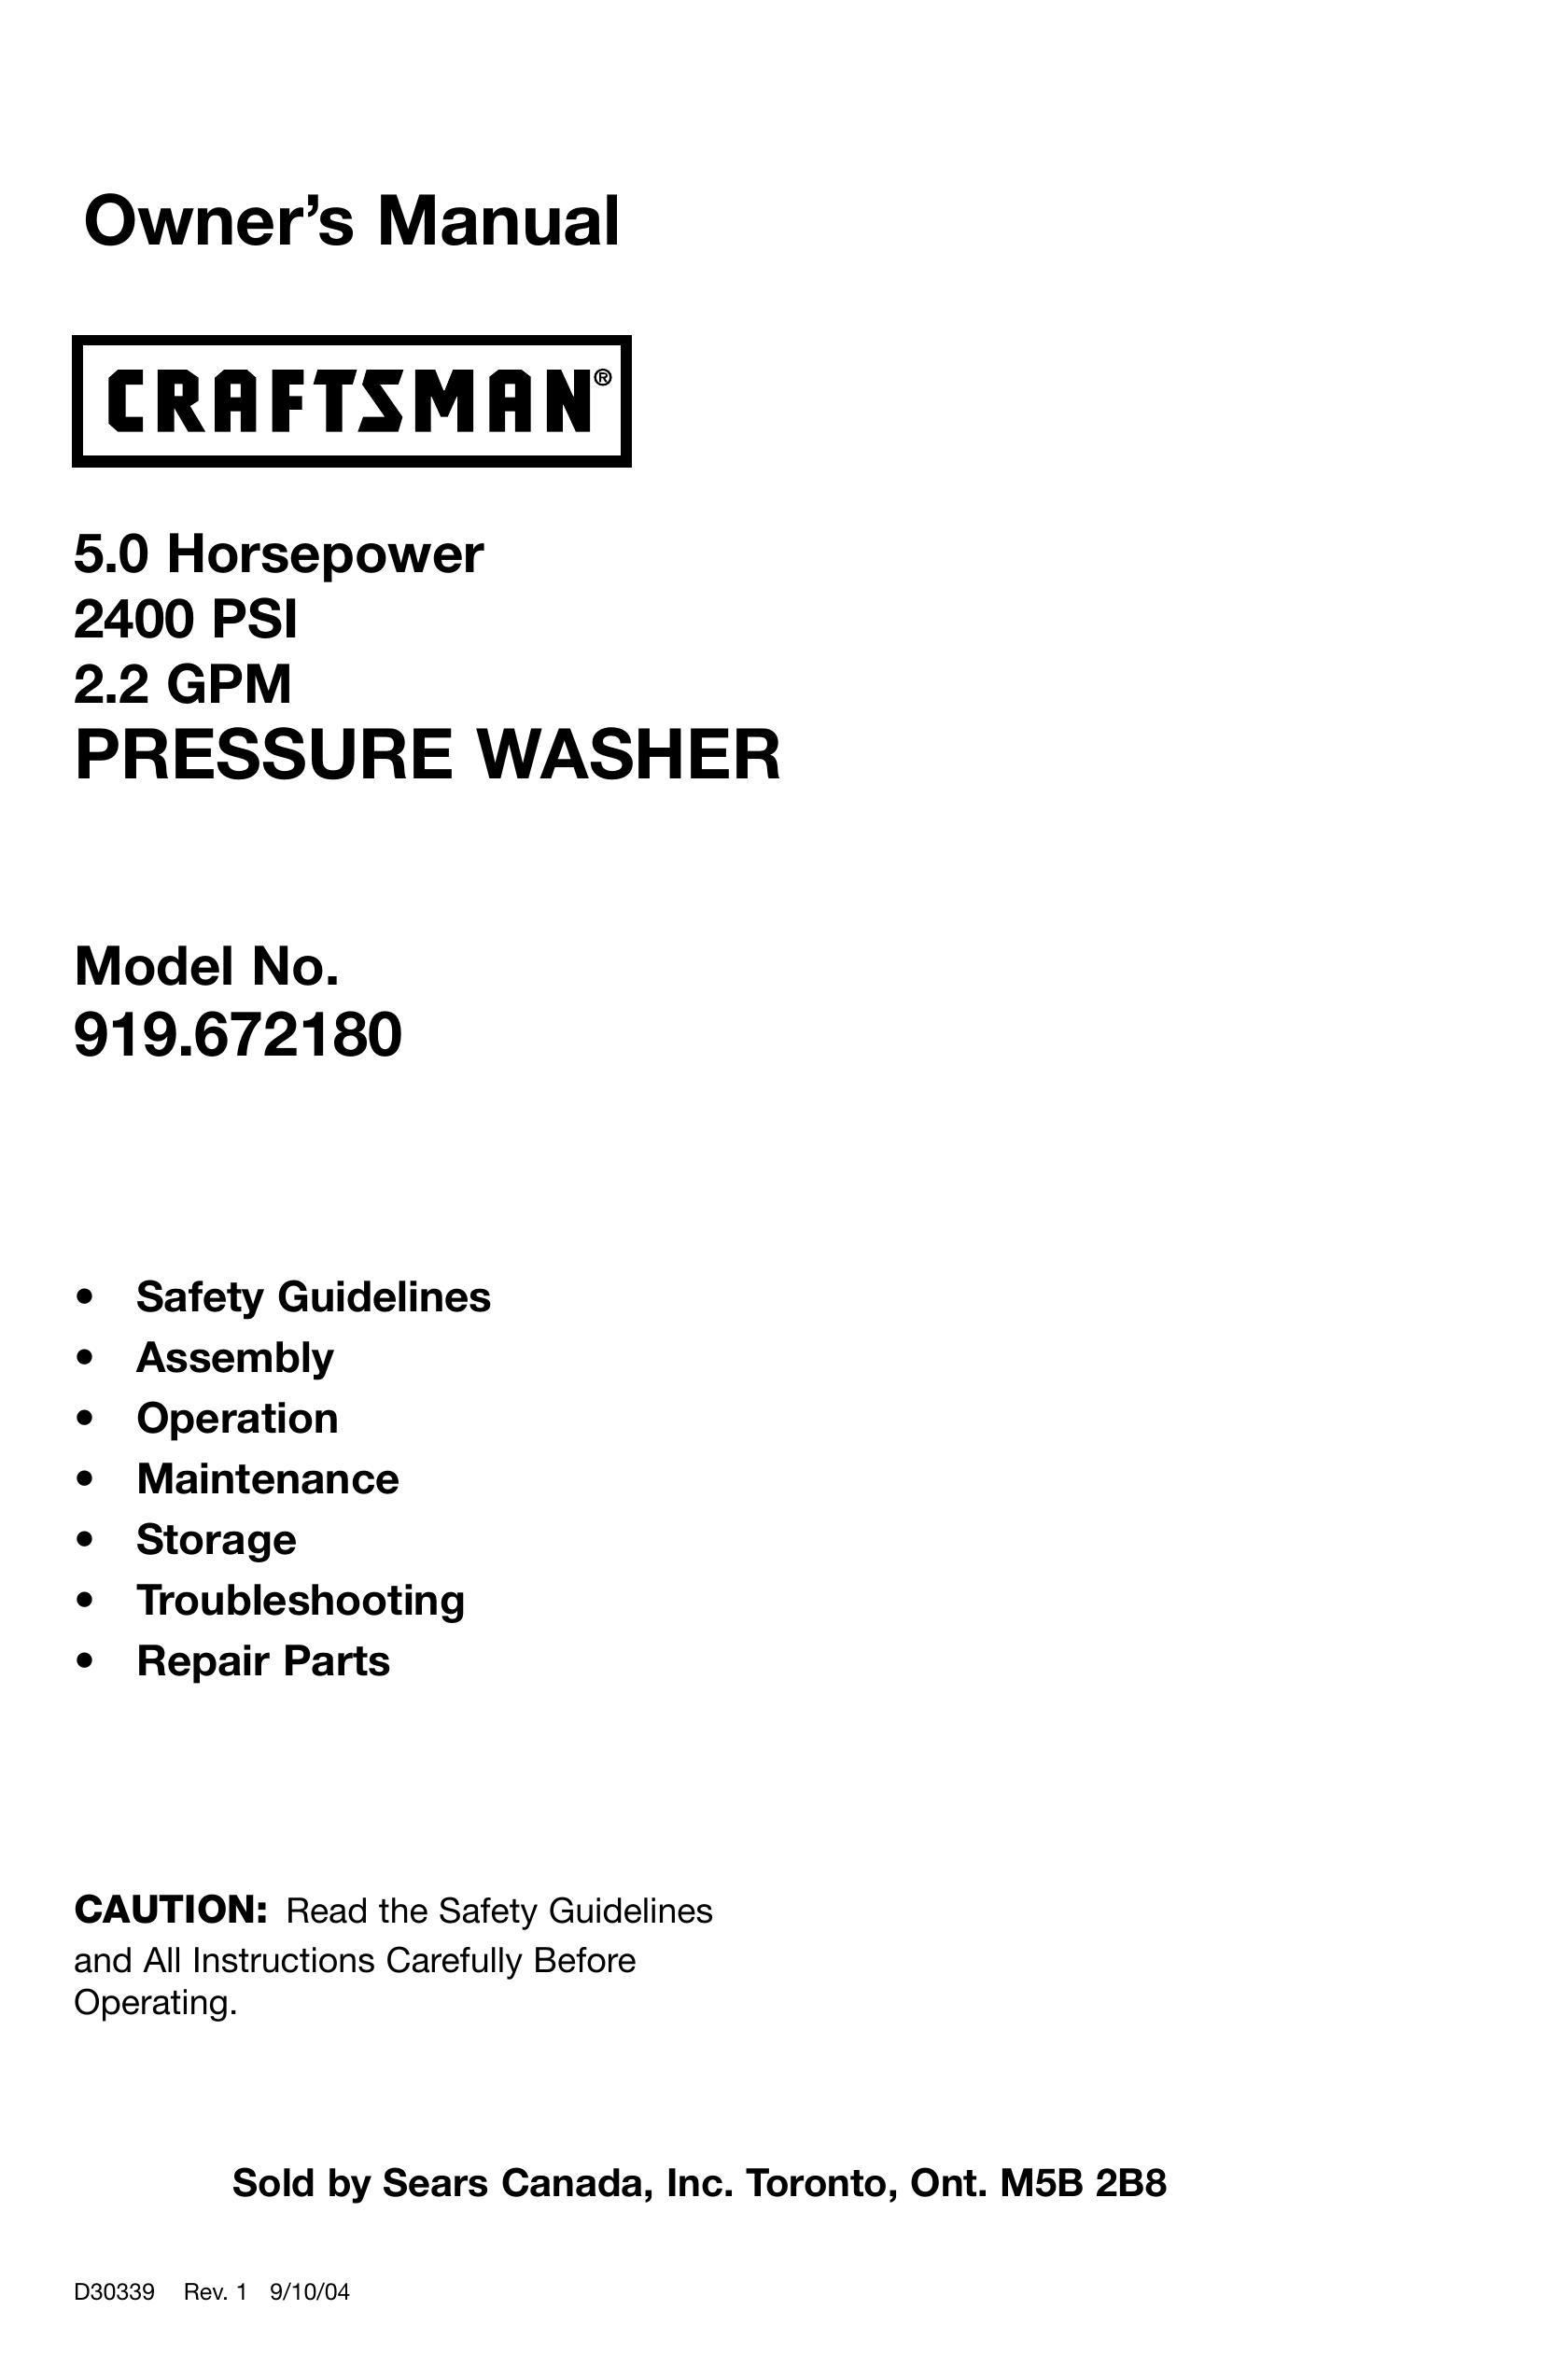 Craftsman 919.672180 Pressure Washer User Manual